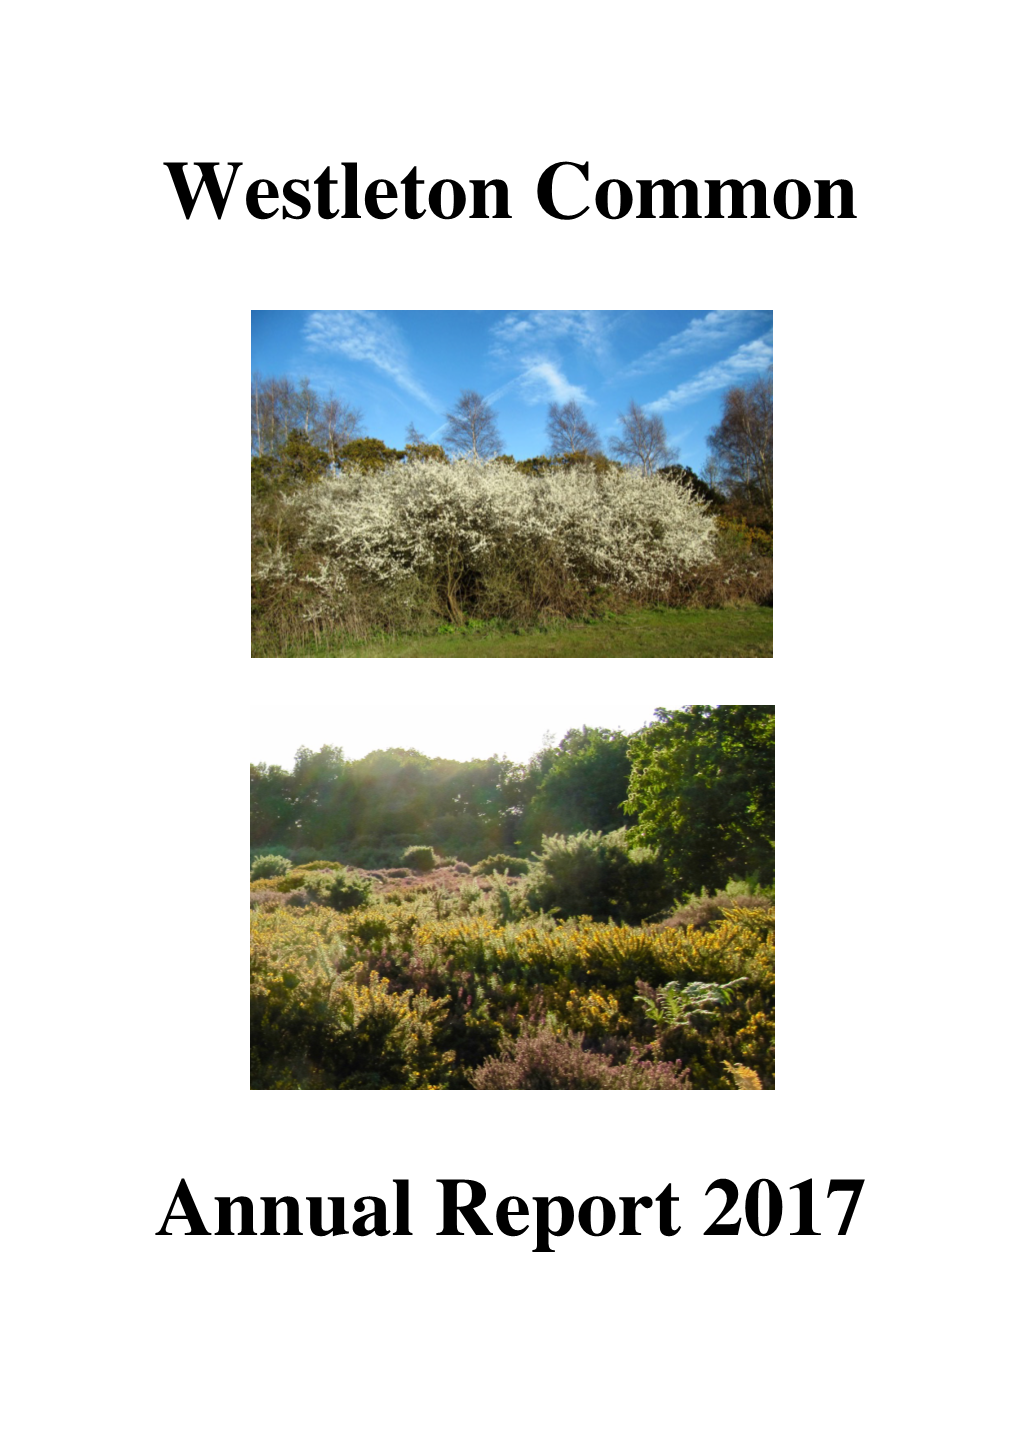 Westleton Common Annual Report 2017